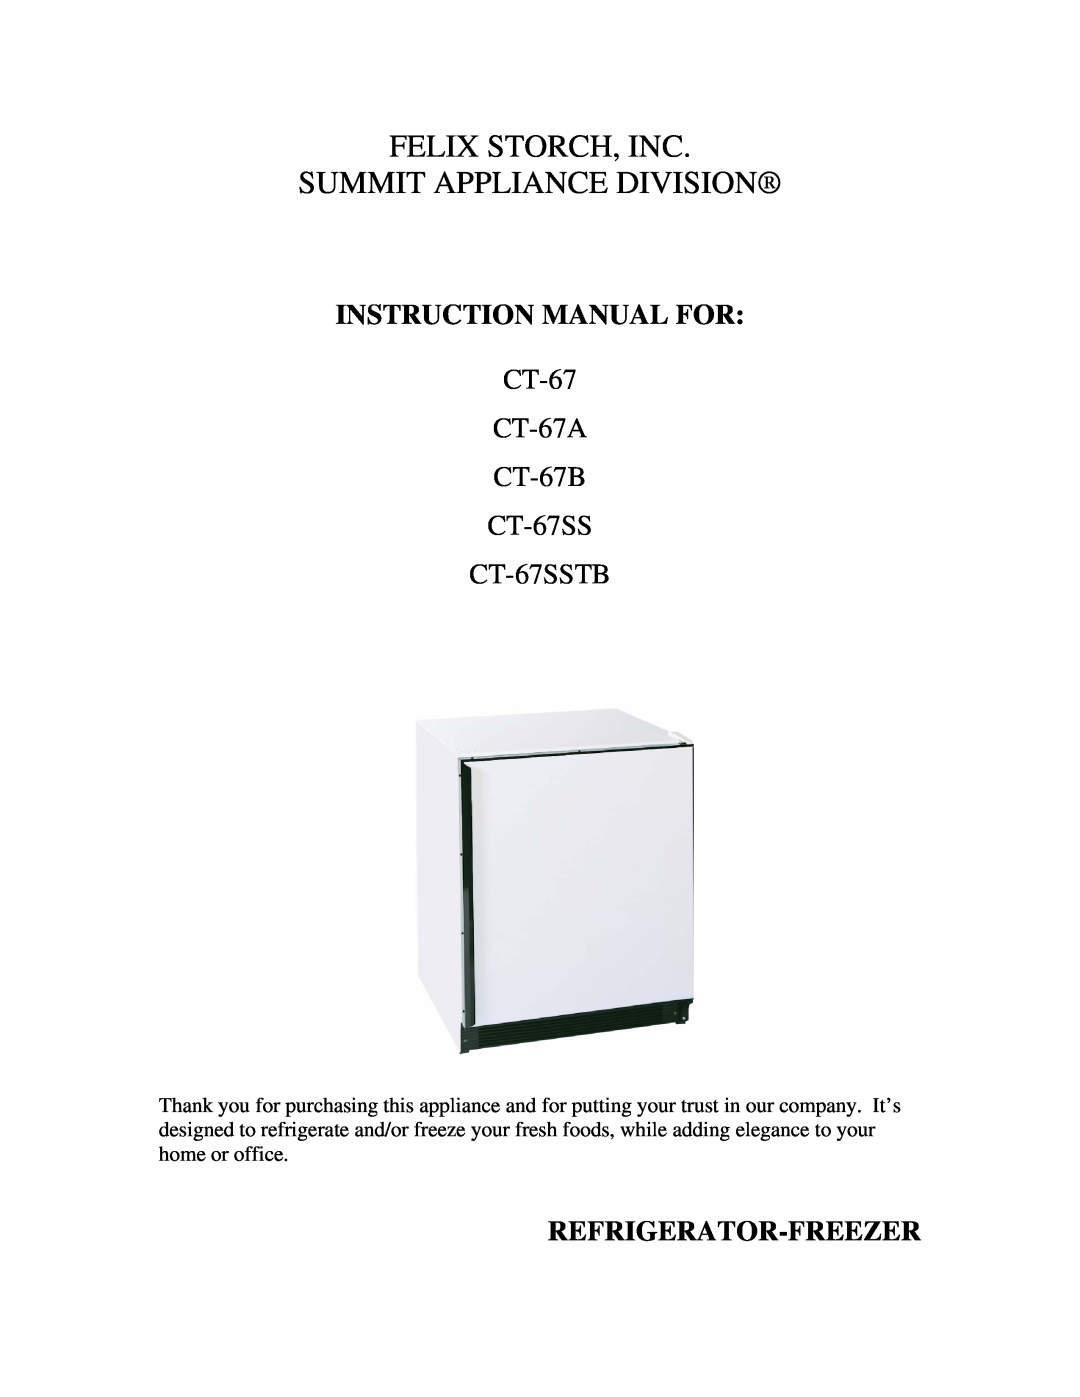 Summit CT-67SSTB, CT-67B, CT-67A instruction manual Refrigerator-Freezer, Felix Storch, Inc Summit Appliance Division 